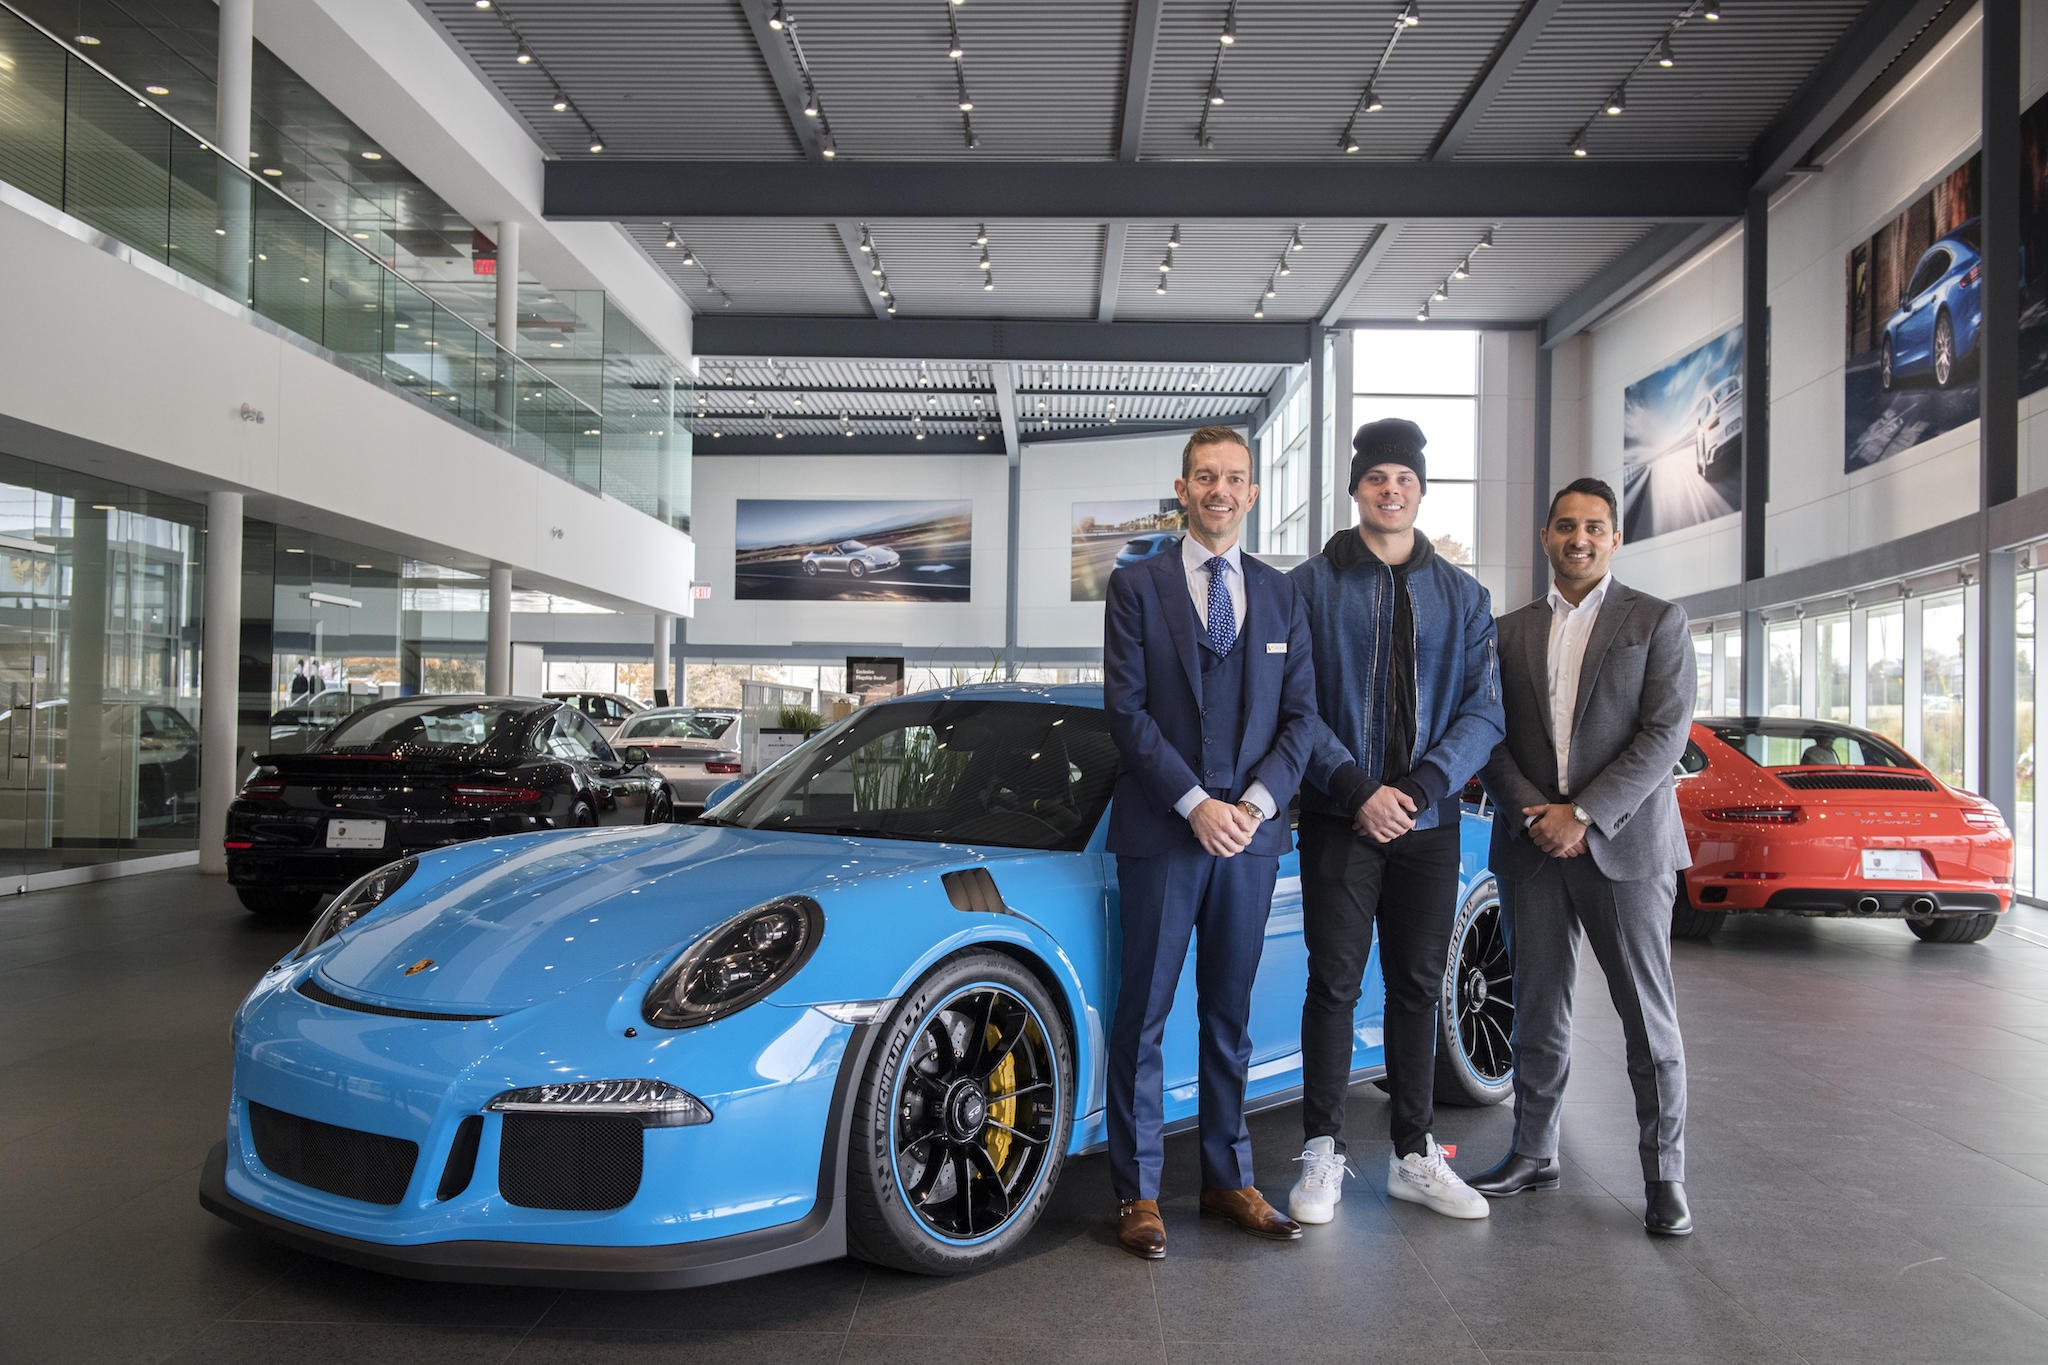 Auston Matthews on X: "RT @PorscheOakville: Performance meets performance.  We are thrilled to announce Auston Matthews @AM34 joining Policaro Group as  a Brand Amb…" / X